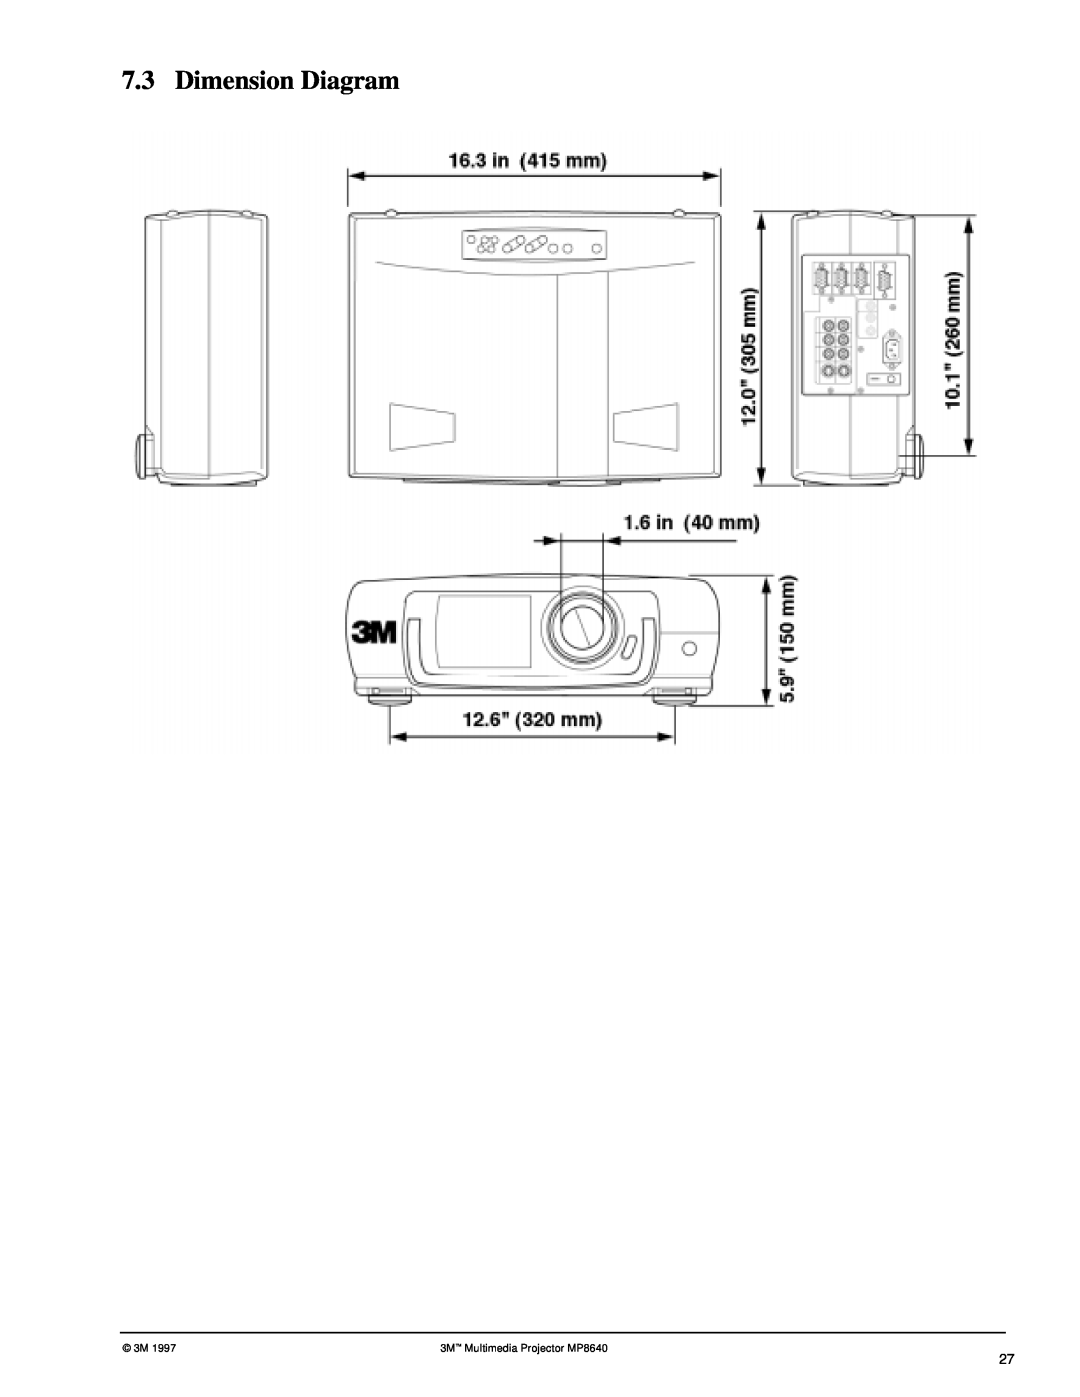 3M manual Dimension Diagram, 3M Multimedia Projector MP8640 